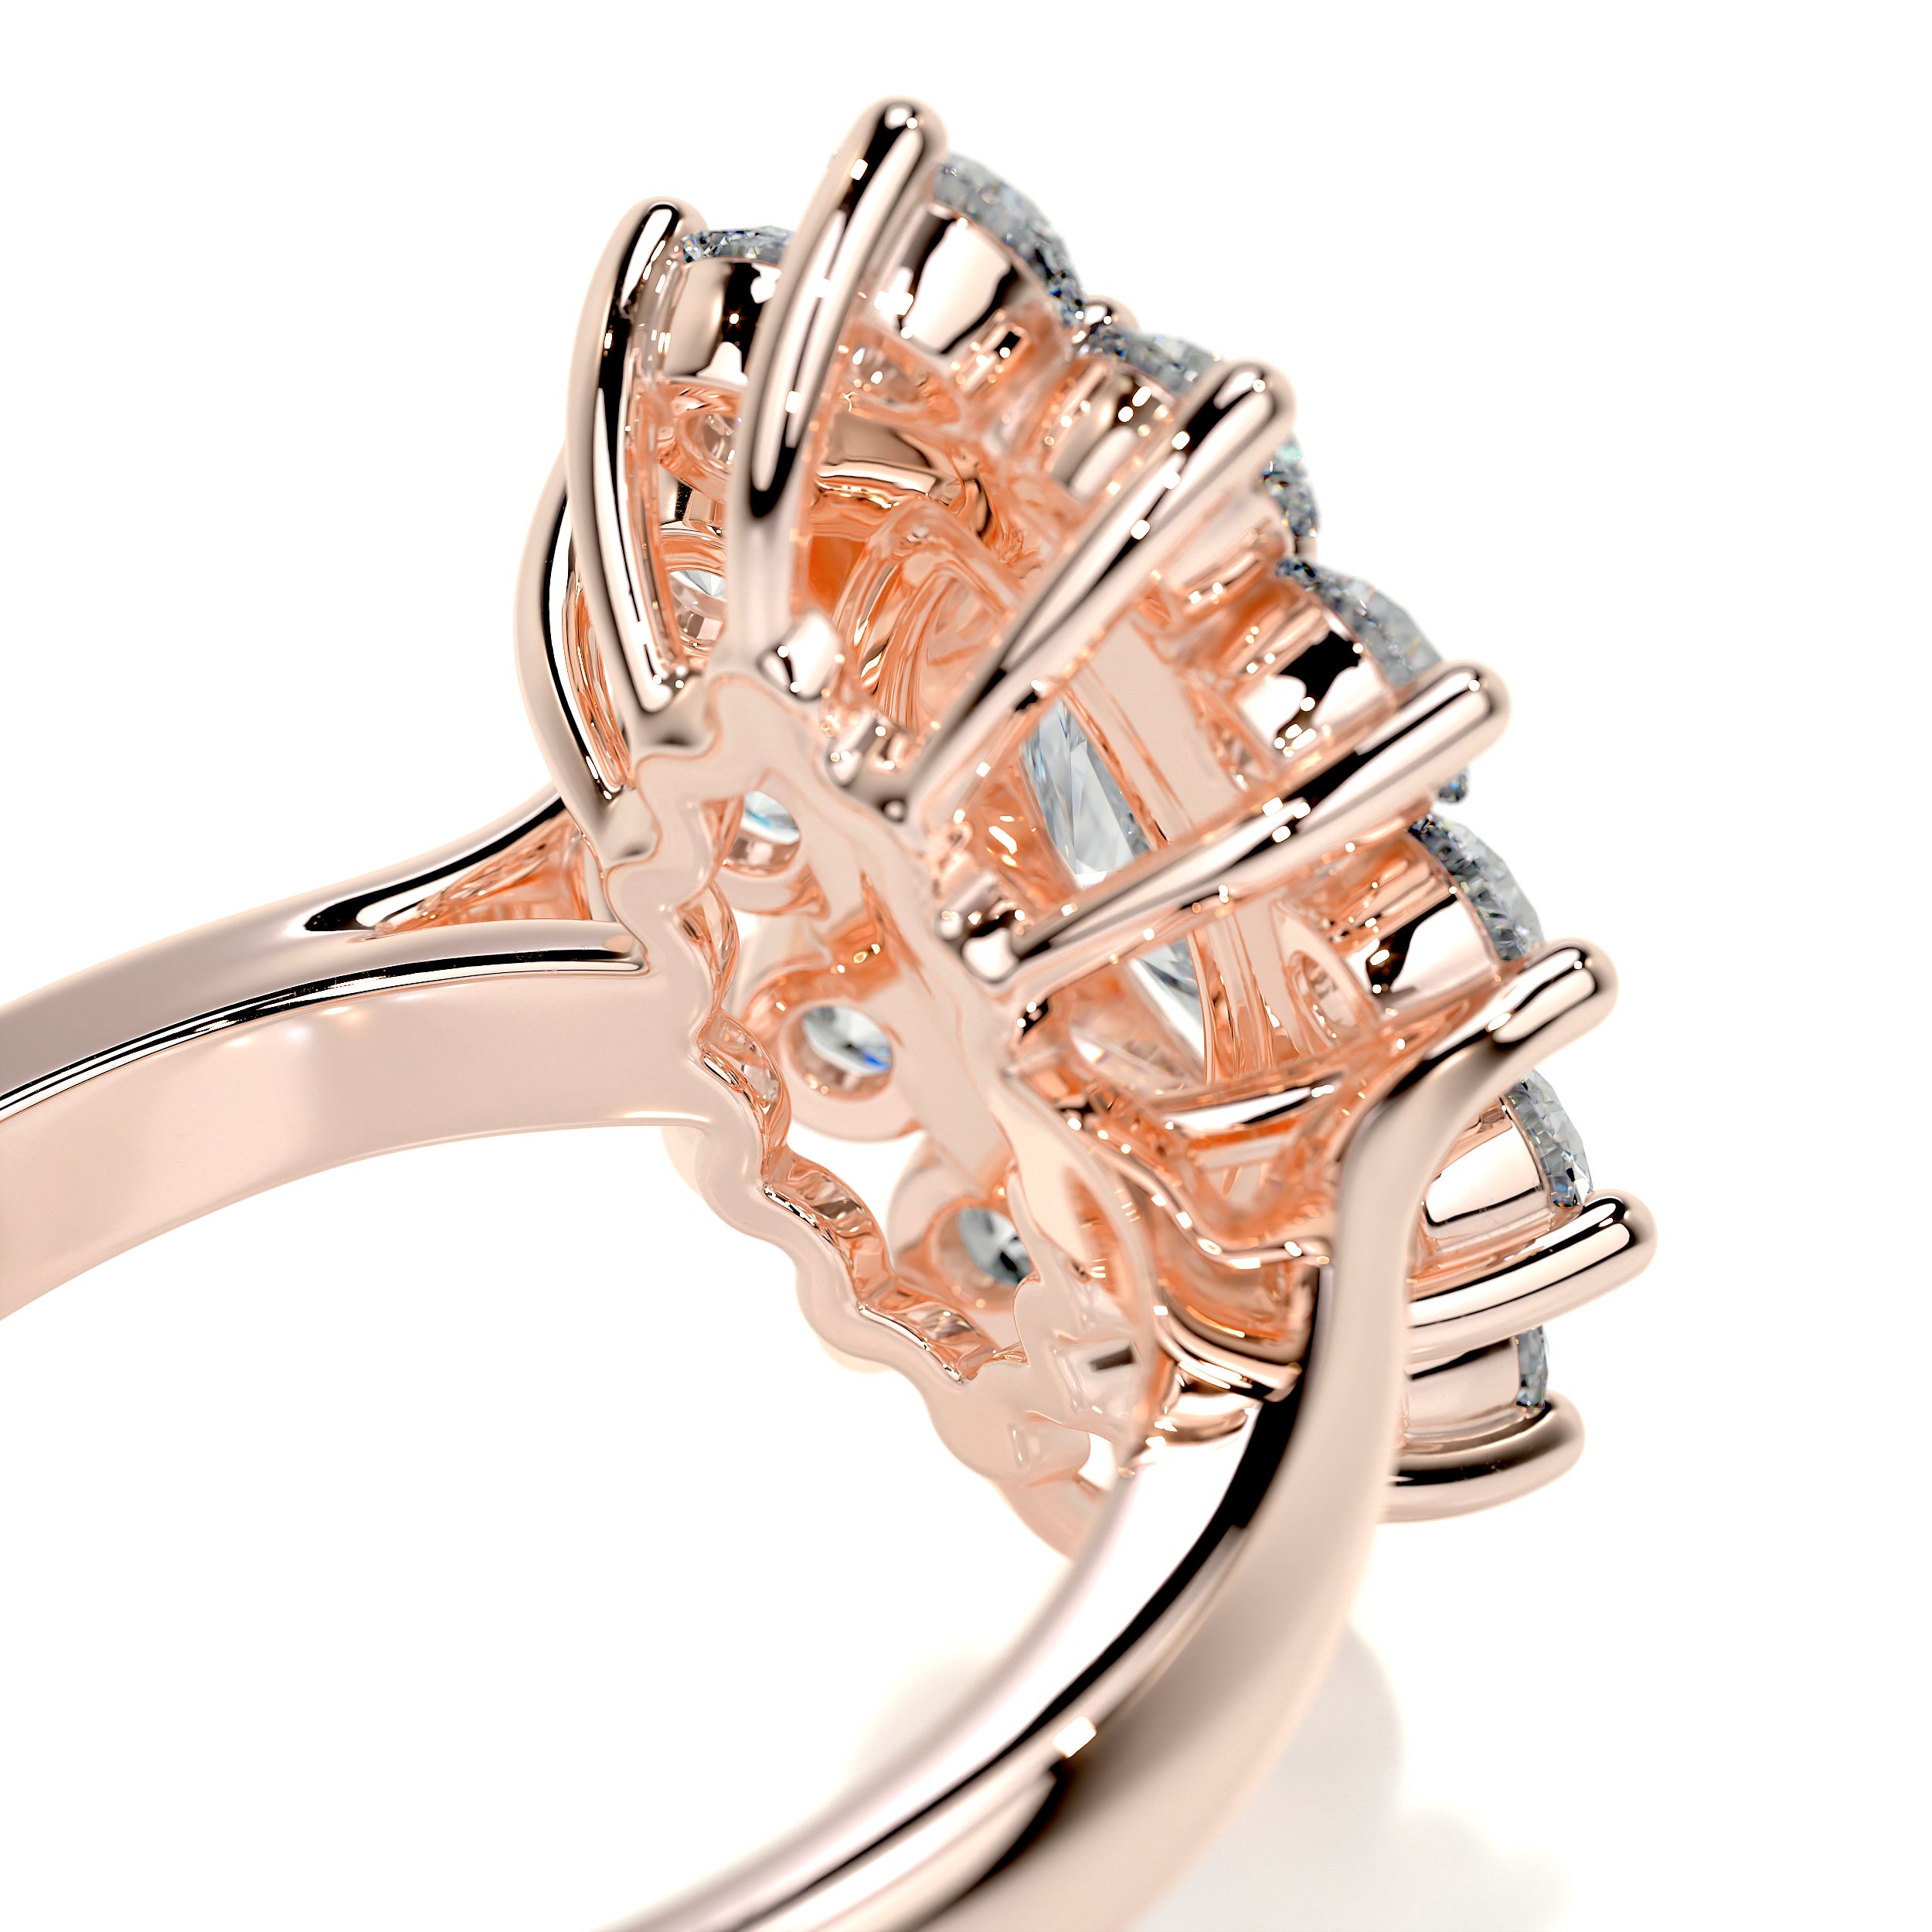 Yali Diamond Engagement Ring -14K Rose Gold